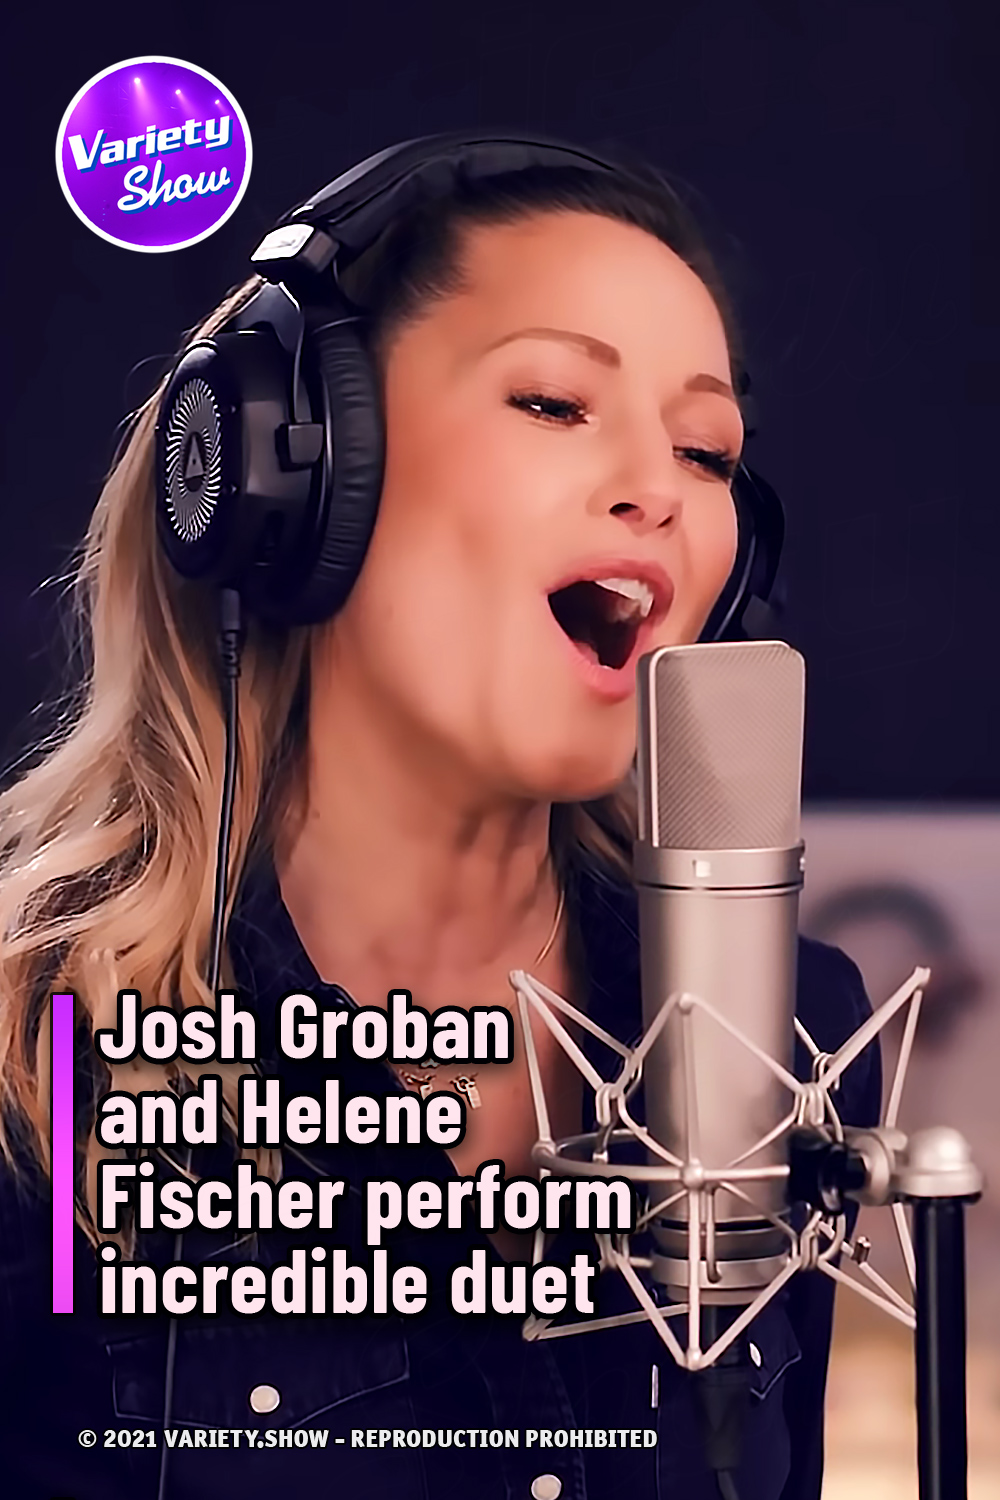 Josh Groban and Helene Fischer perform incredible duet